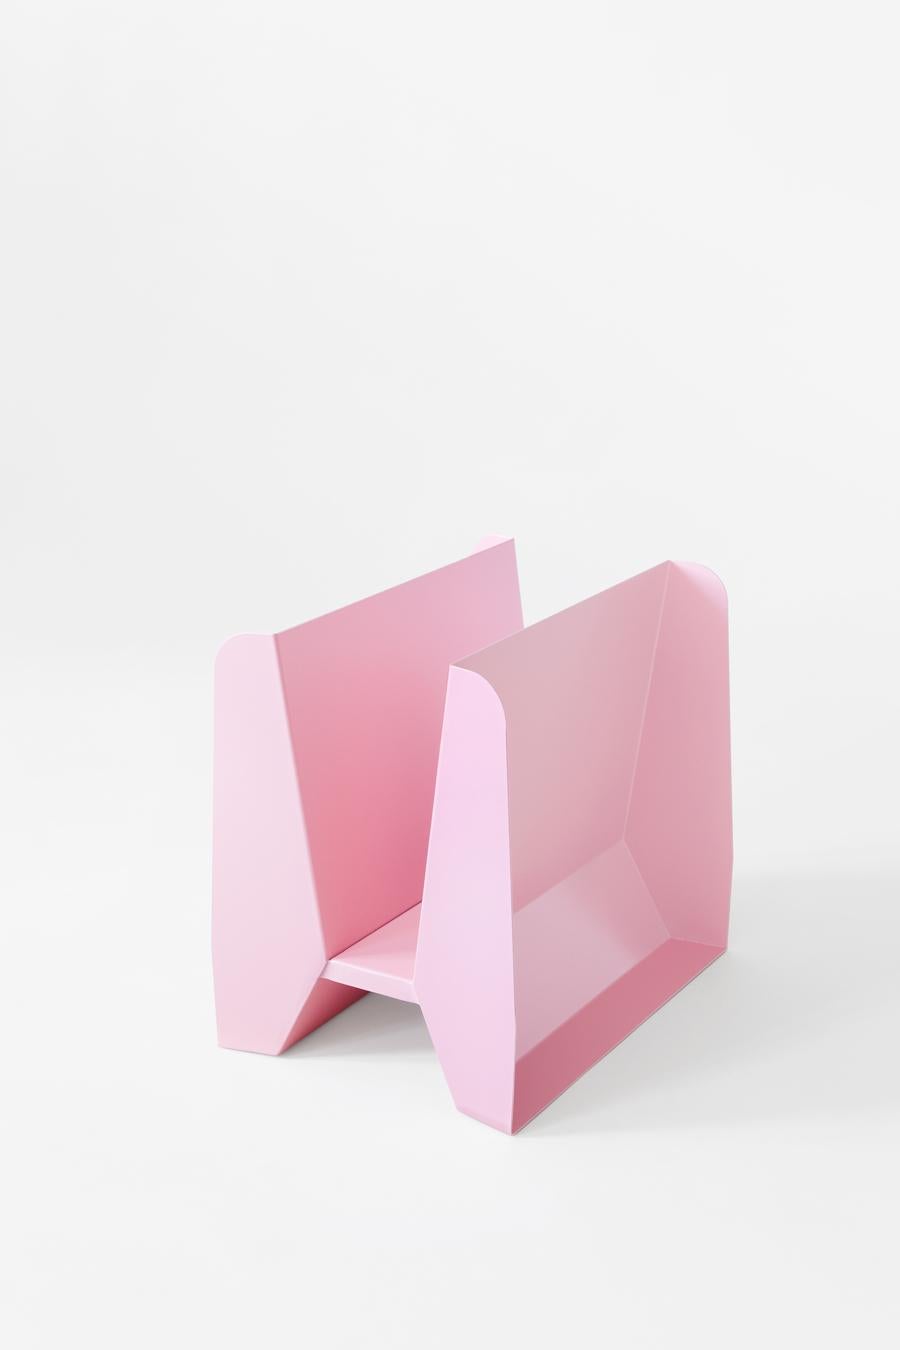 Adolfo Abejon Contemporary 'Adler' Pink Metal Sculptural Magazine Rack 4